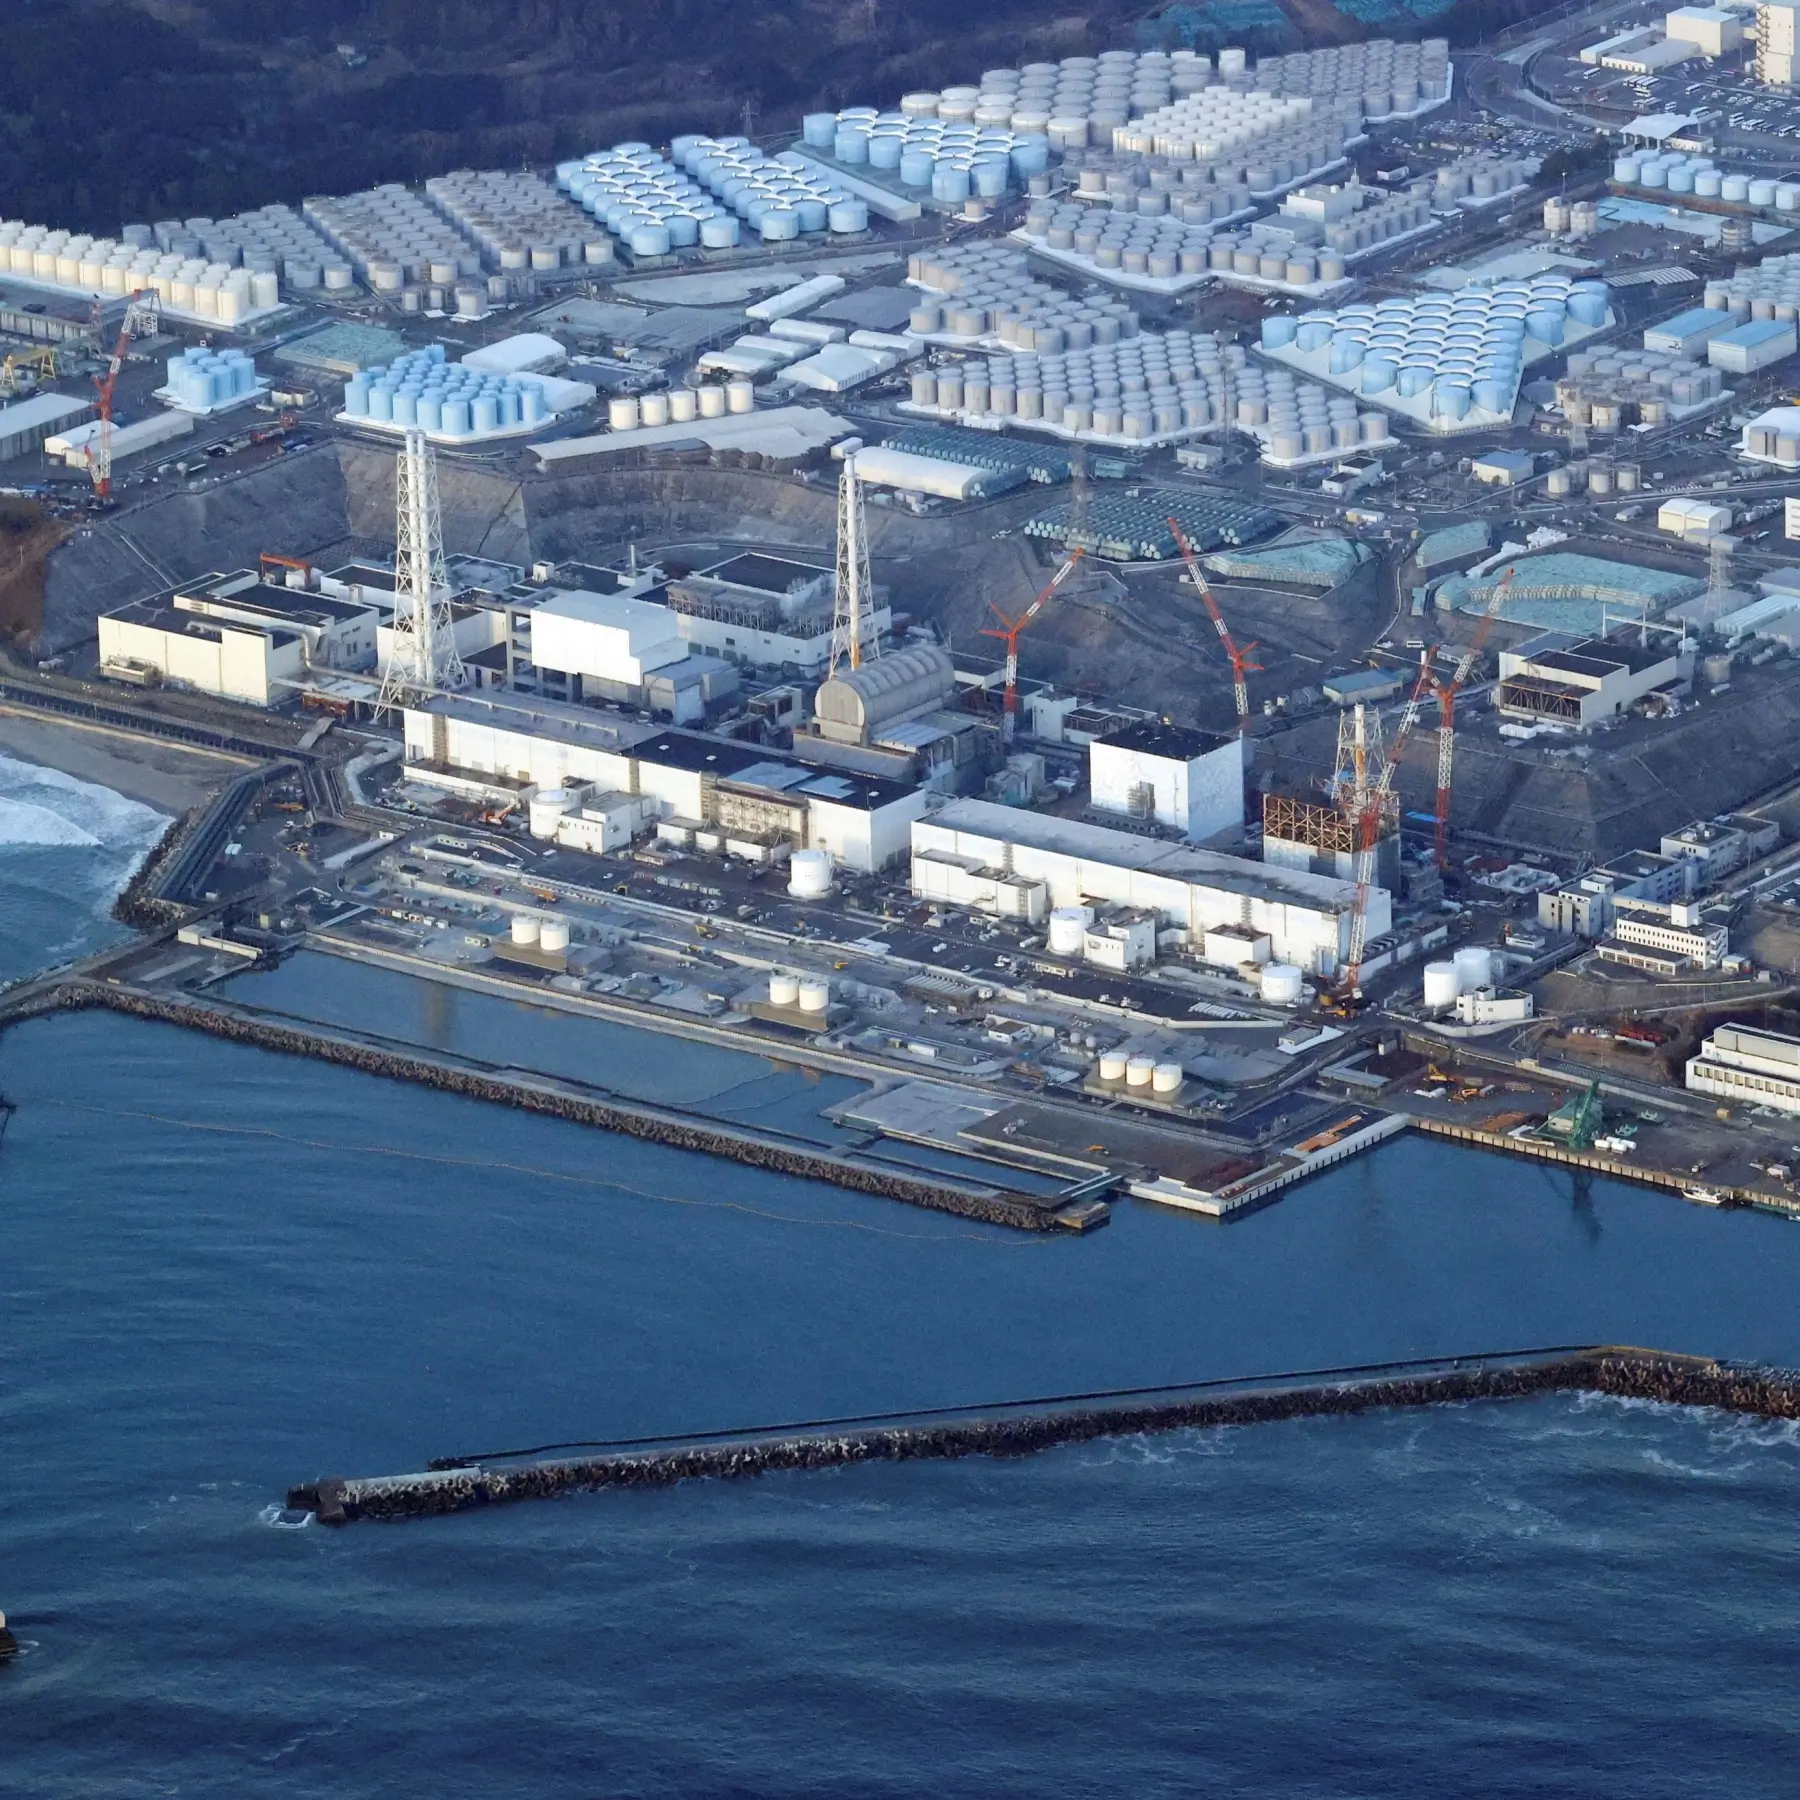 Japan’s Plan to Release Fukushima Radioactive Water into Ocean Raises Concerns